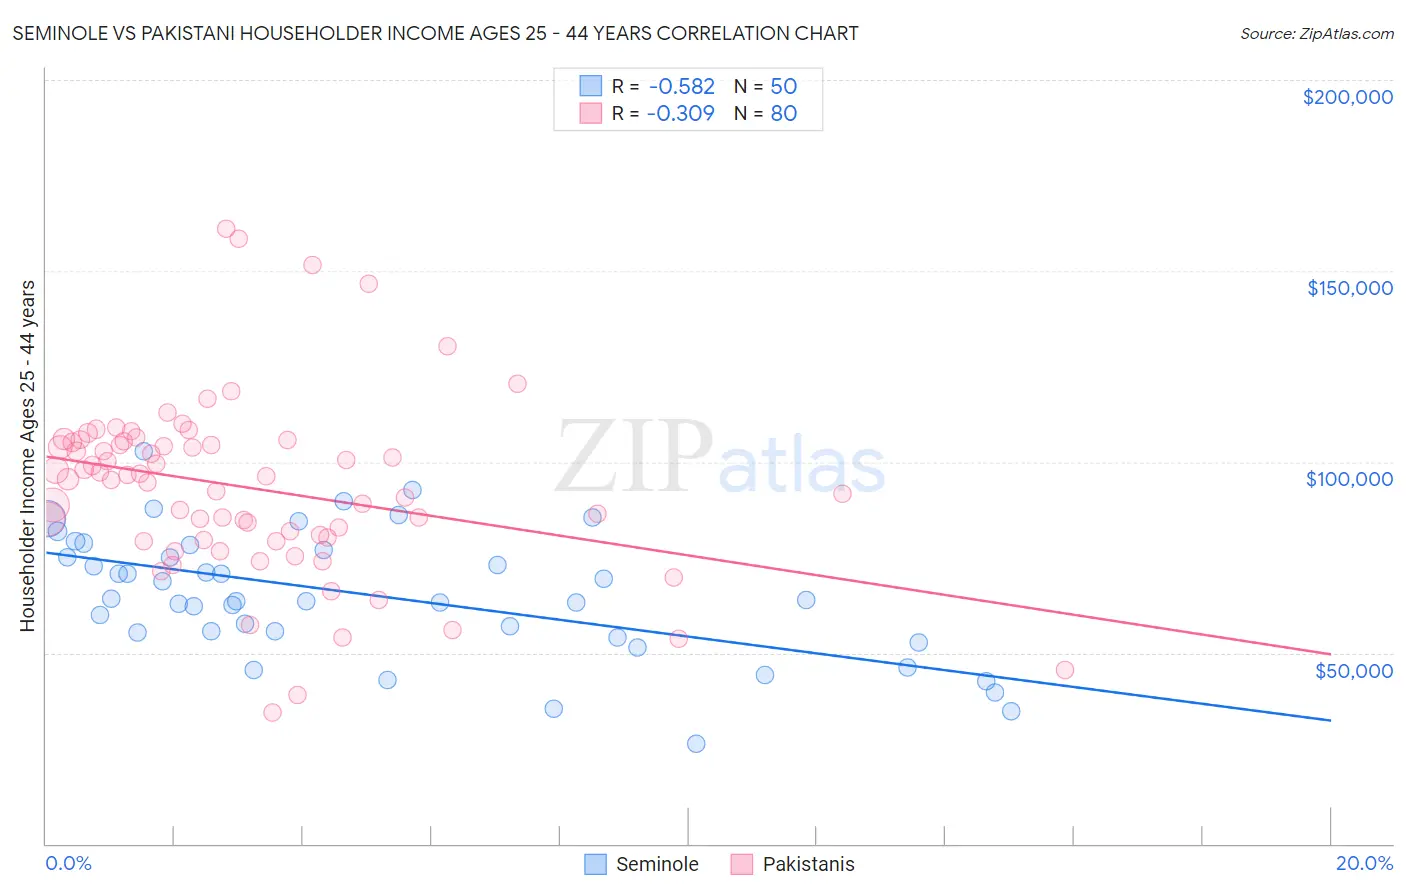 Seminole vs Pakistani Householder Income Ages 25 - 44 years